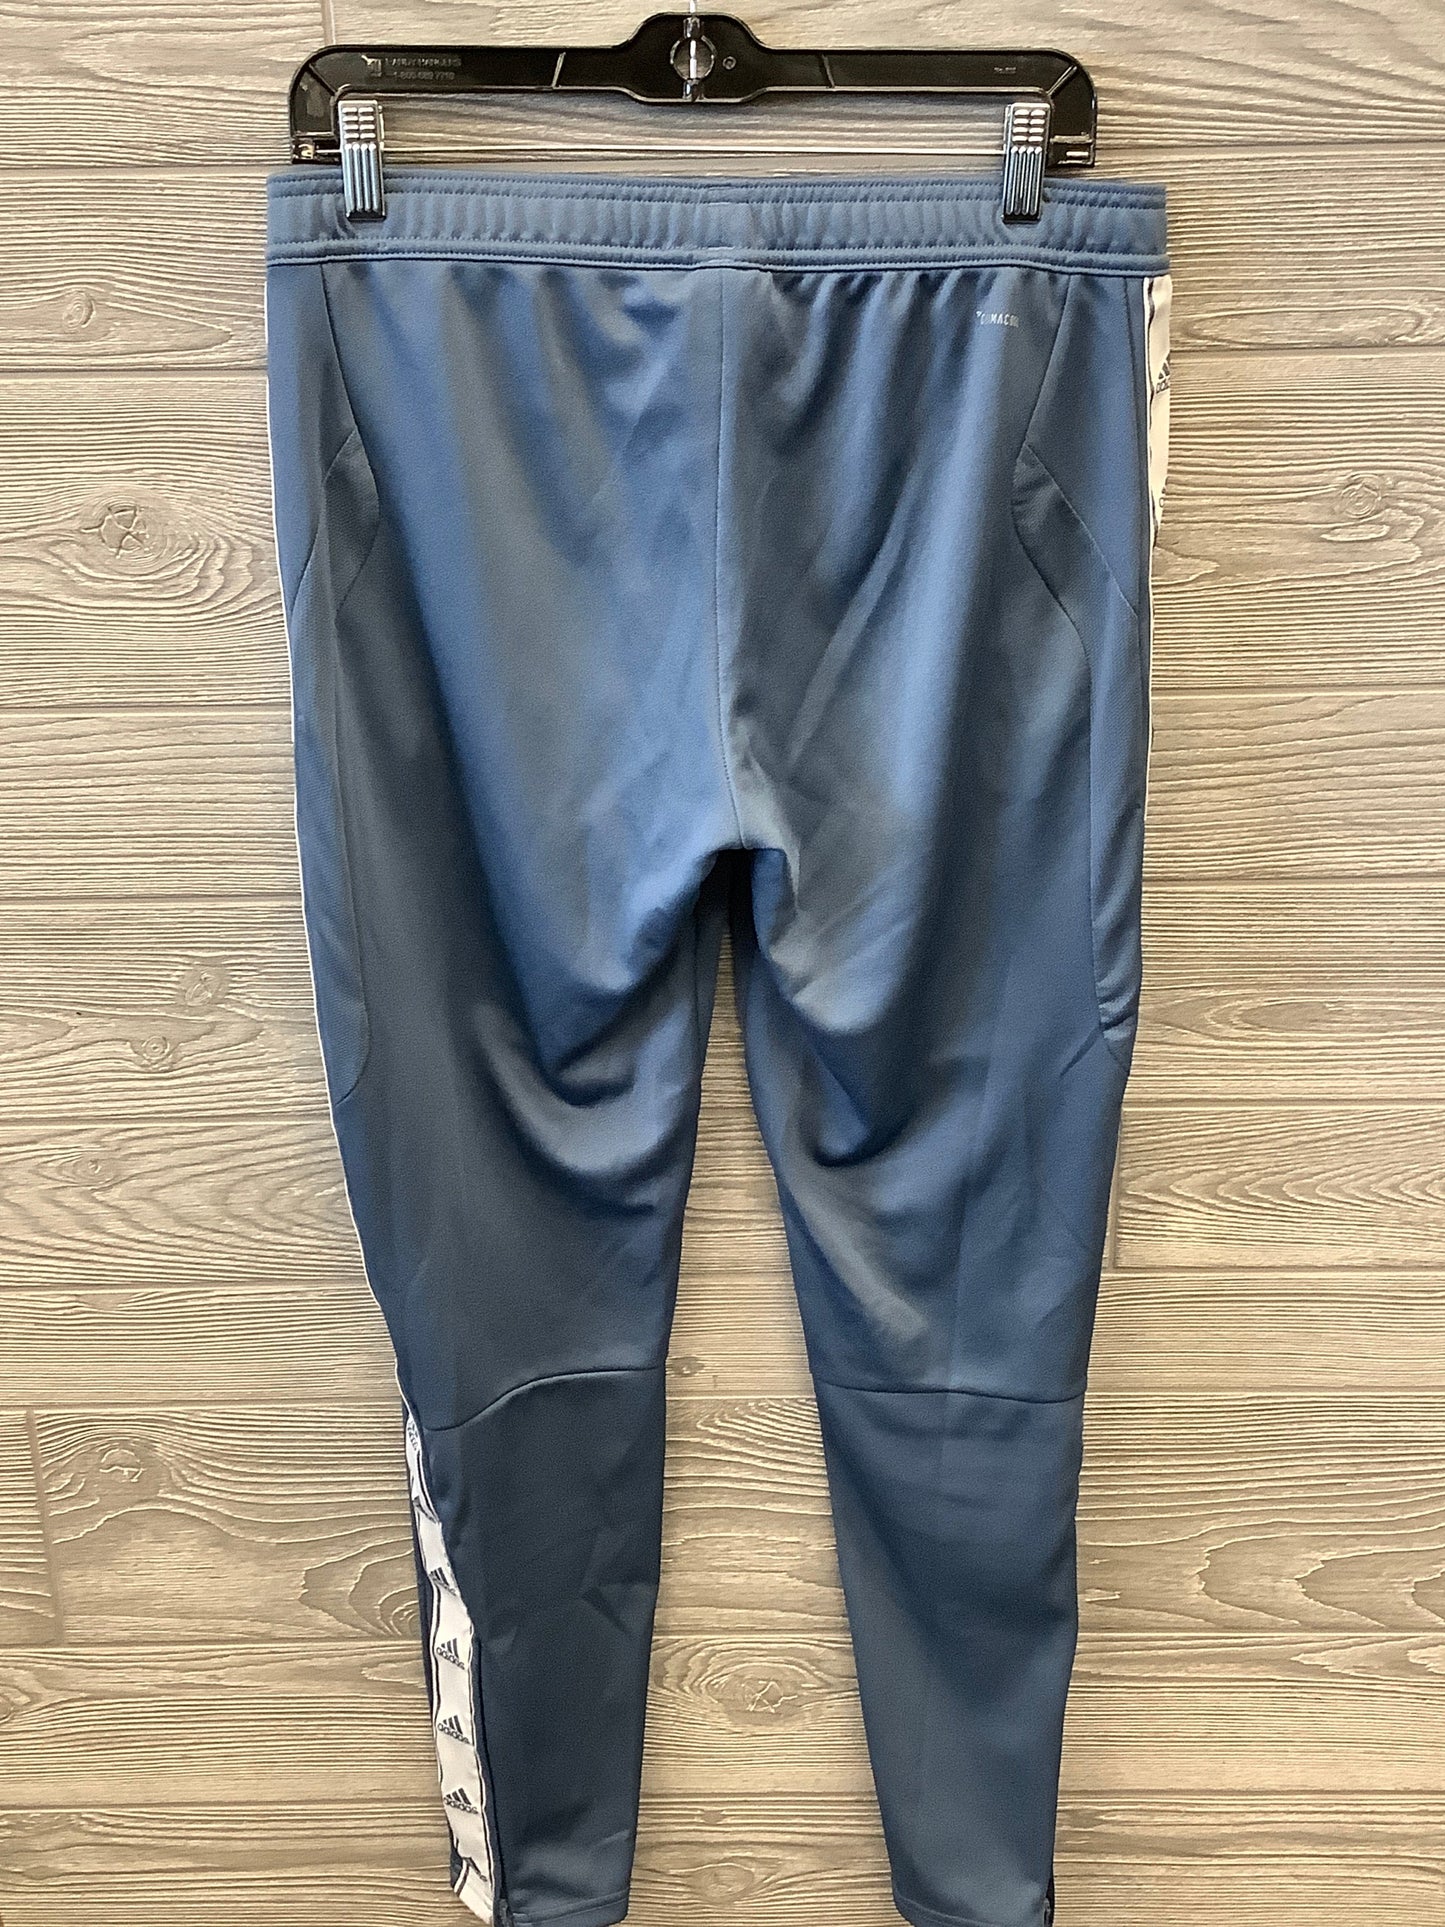 Blue Athletic Pants Adidas, Size M